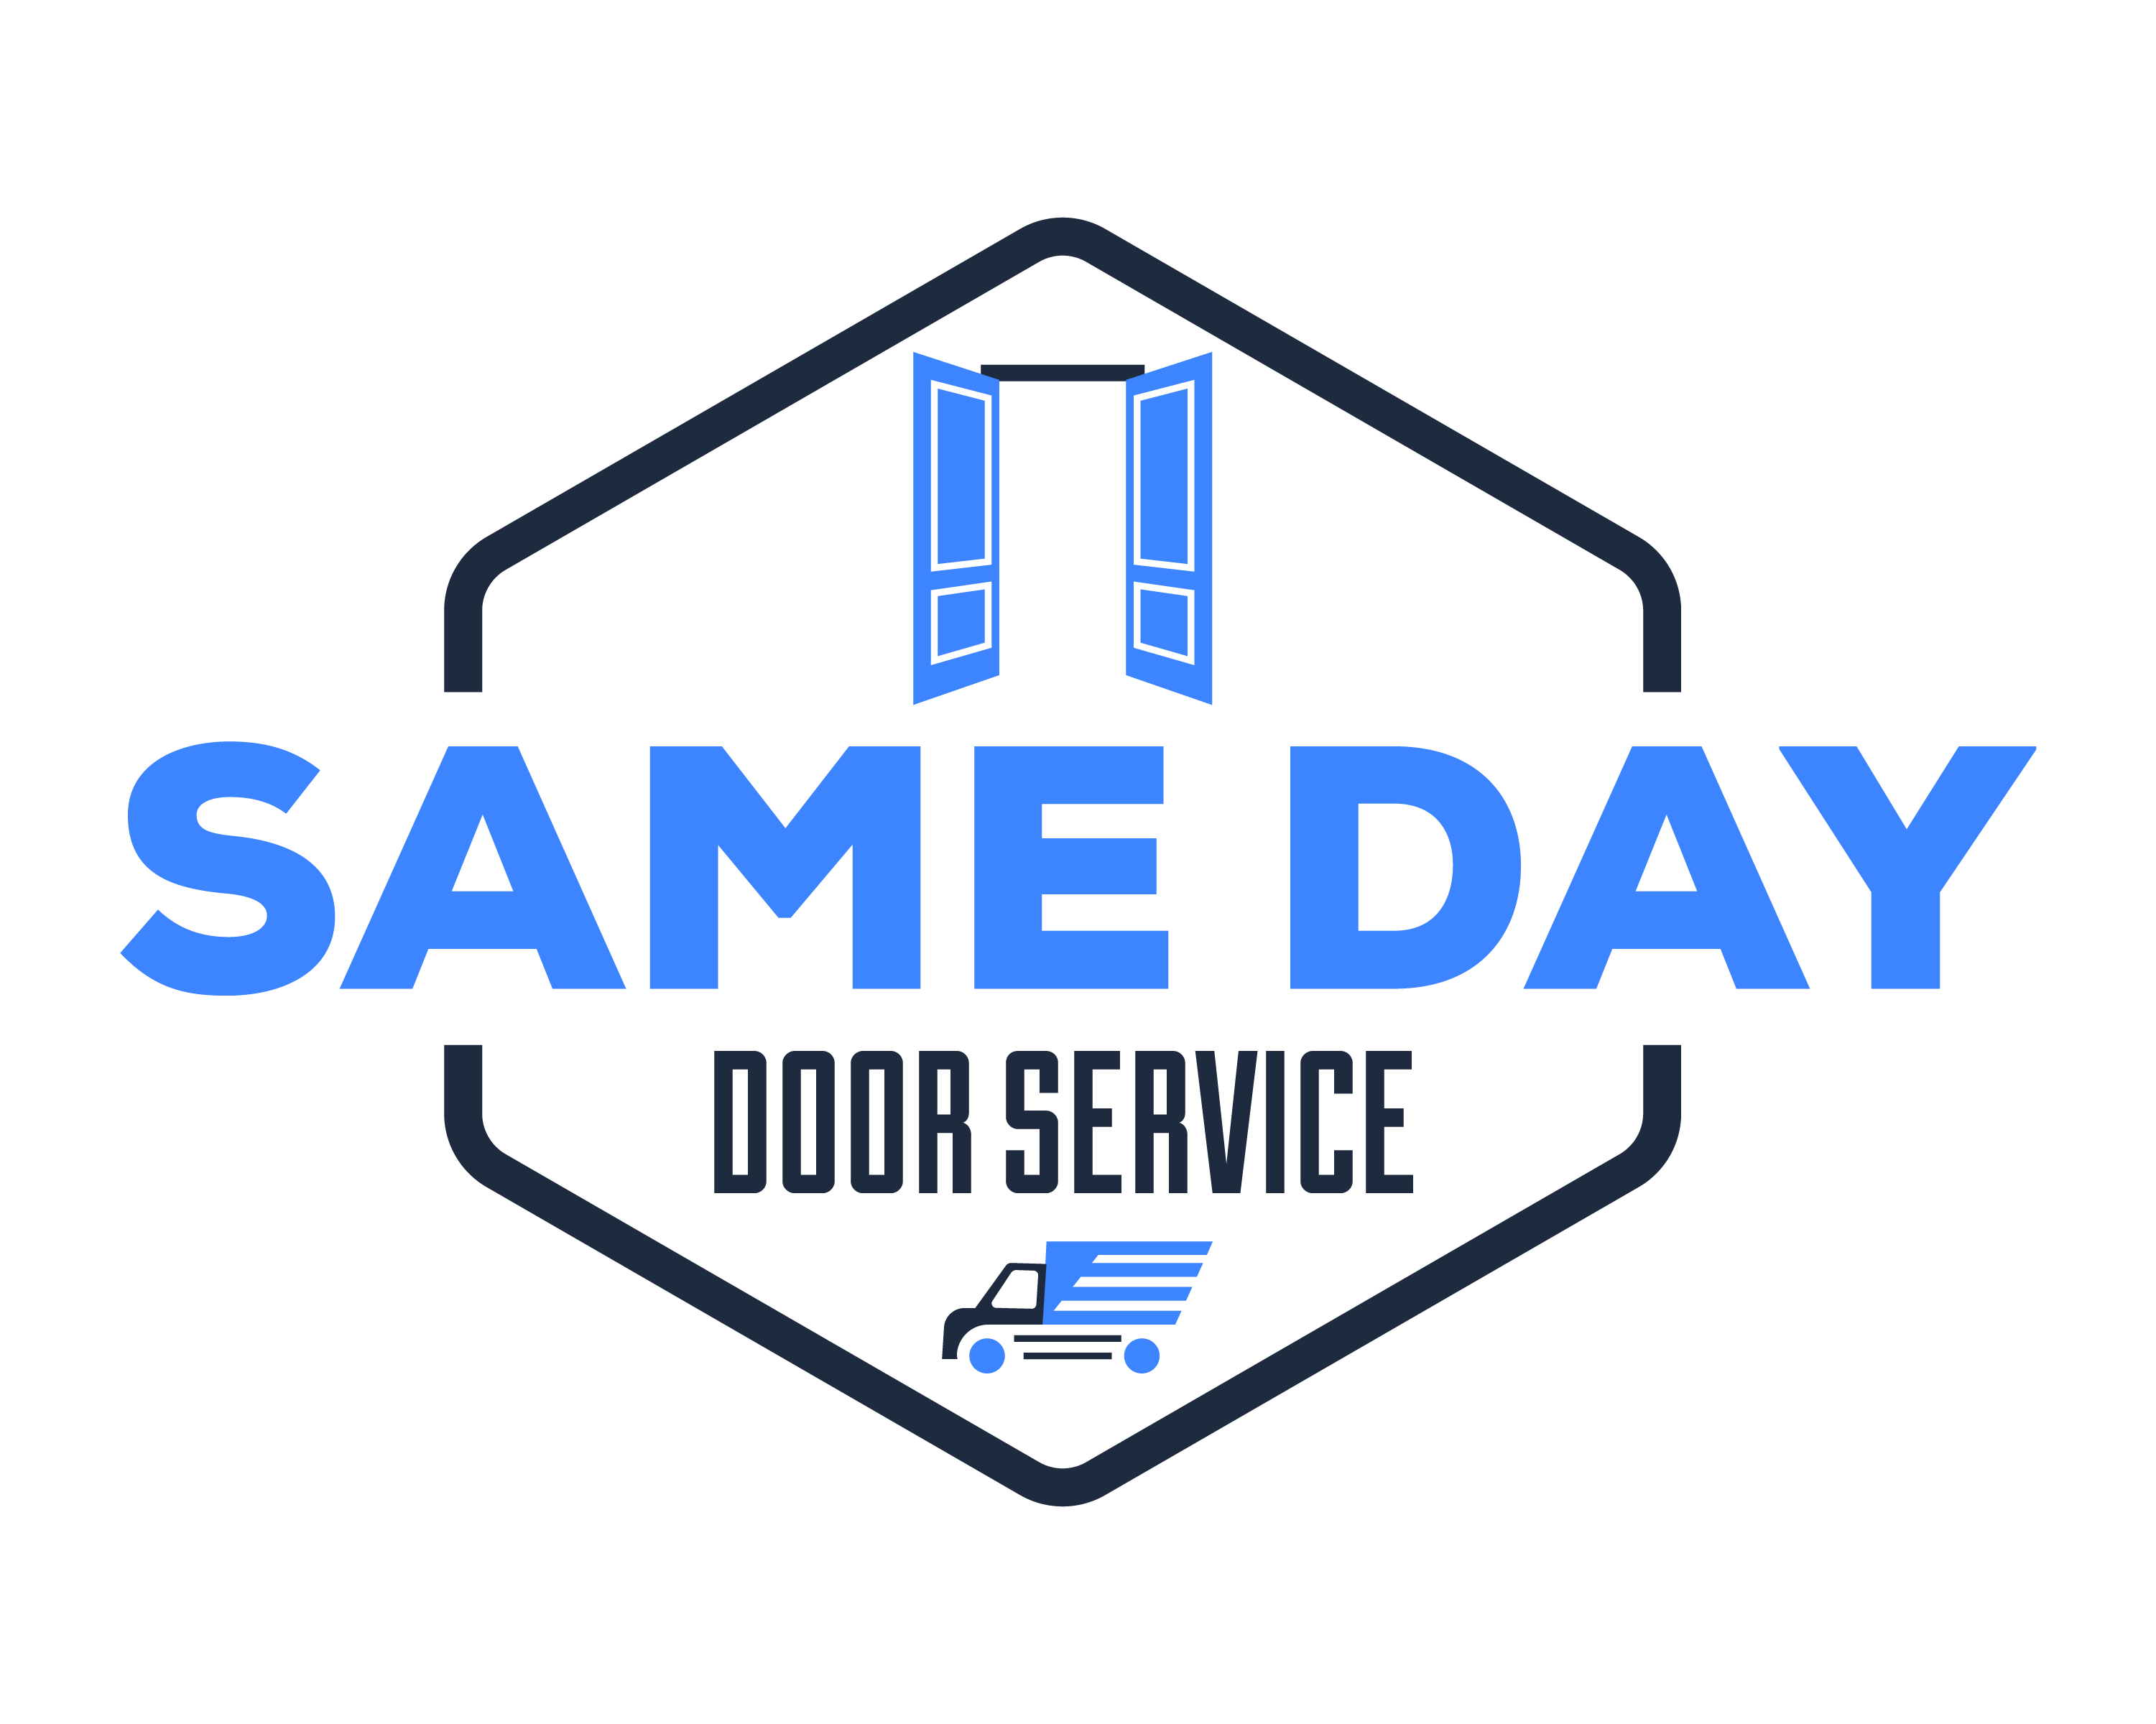 Same Day door service color logo